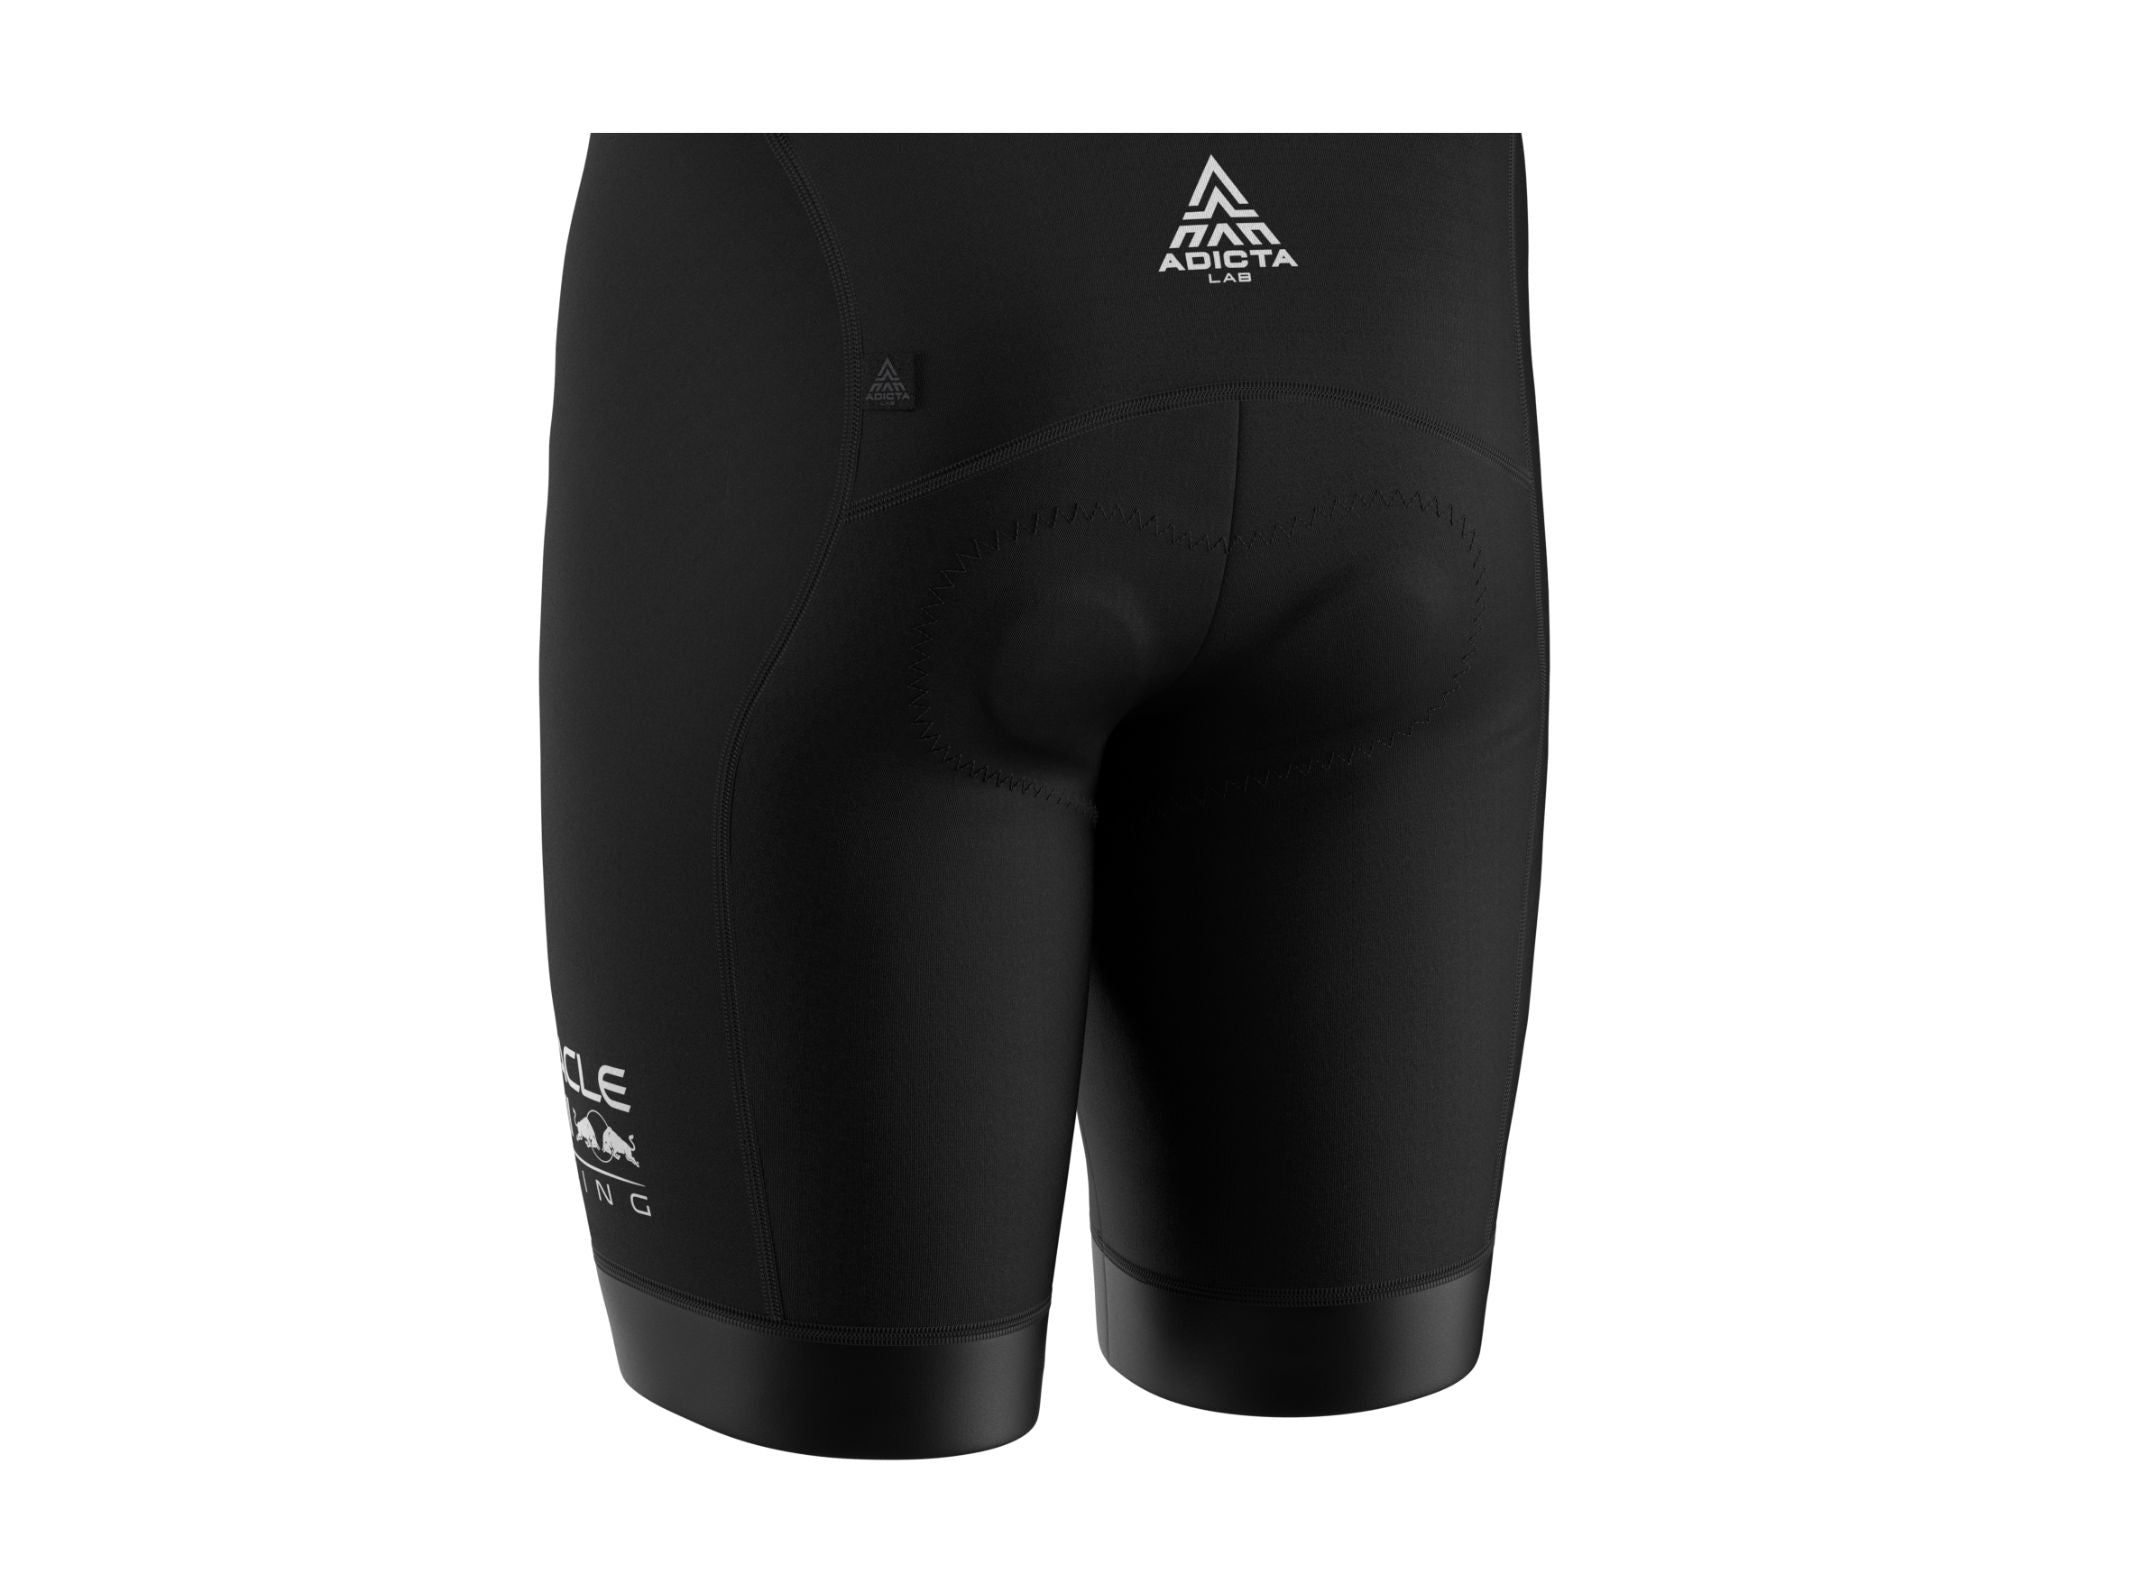 JOULE Bib Short | ADICTA LAB | apparel | Apparel, Apparel | Cycling Shorts